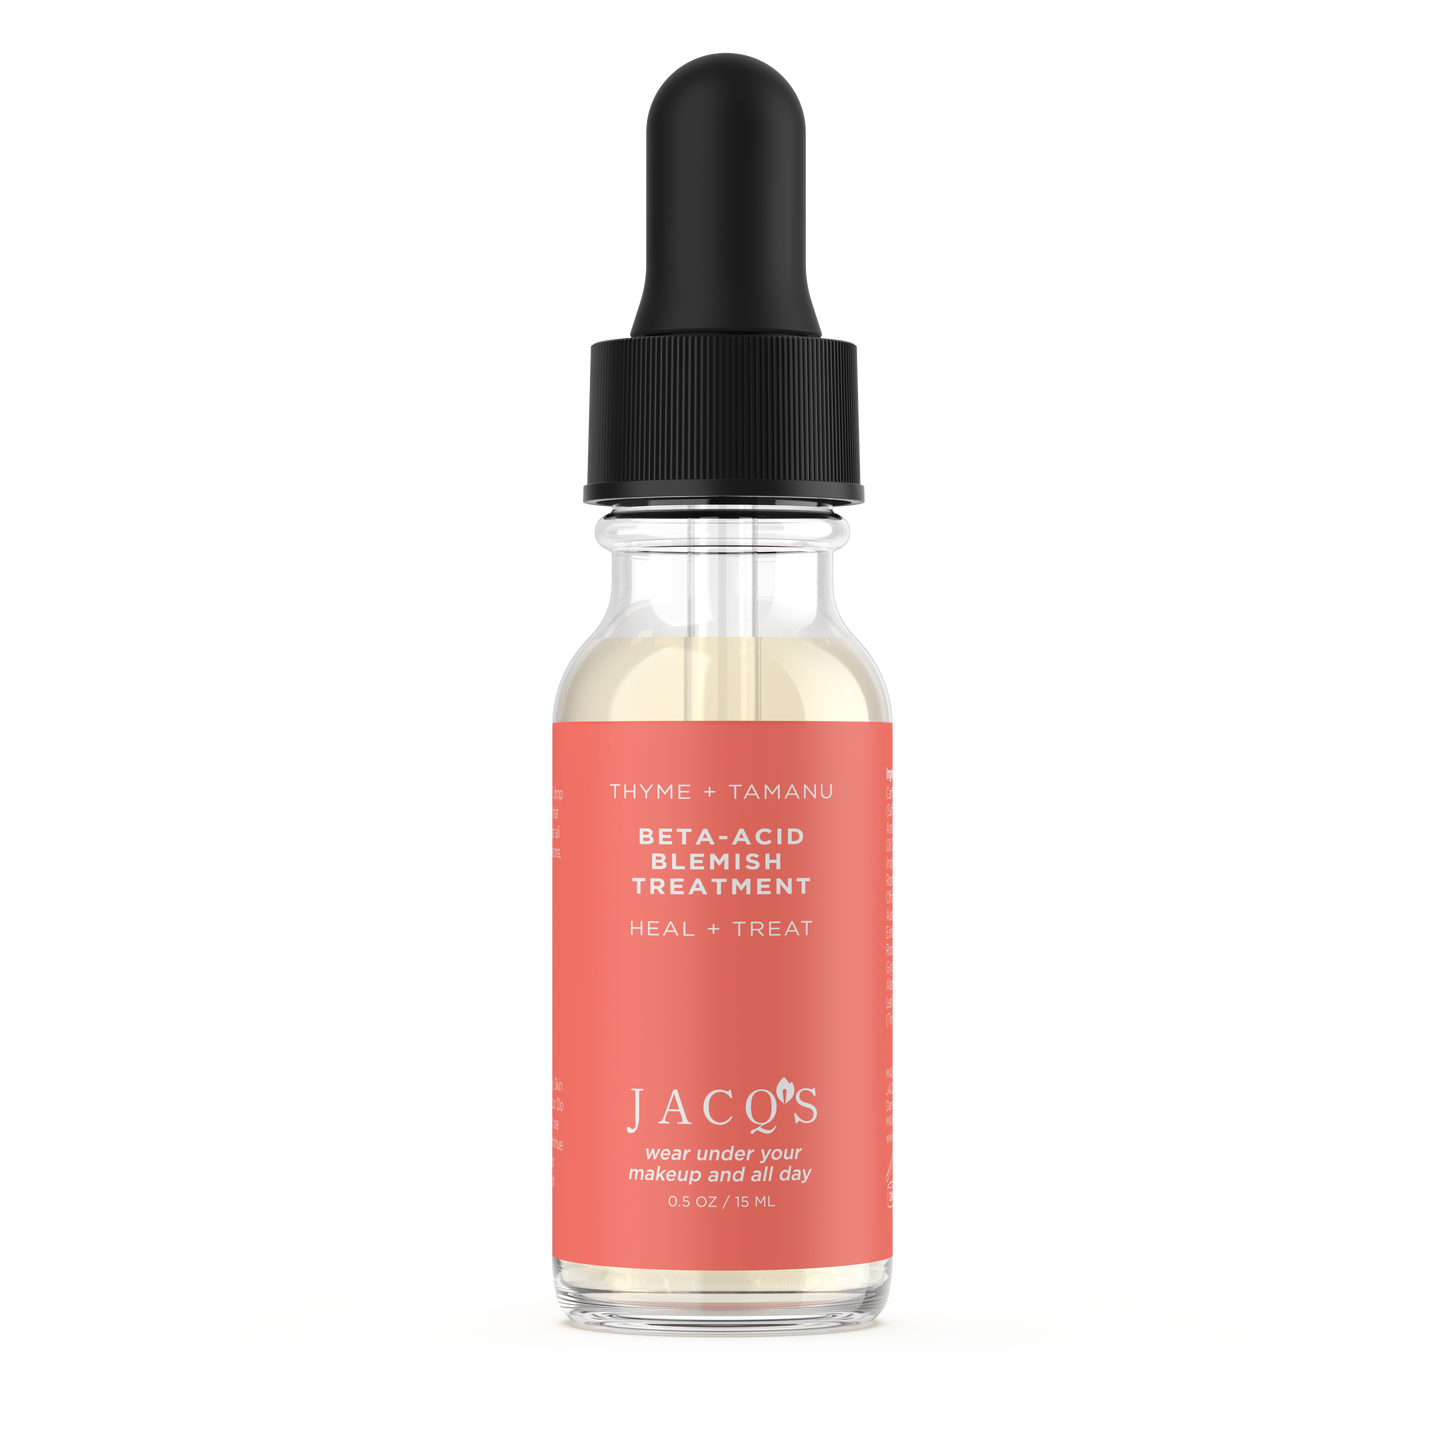 JACQ's  Acne Spot Treatment - Beta-Acid